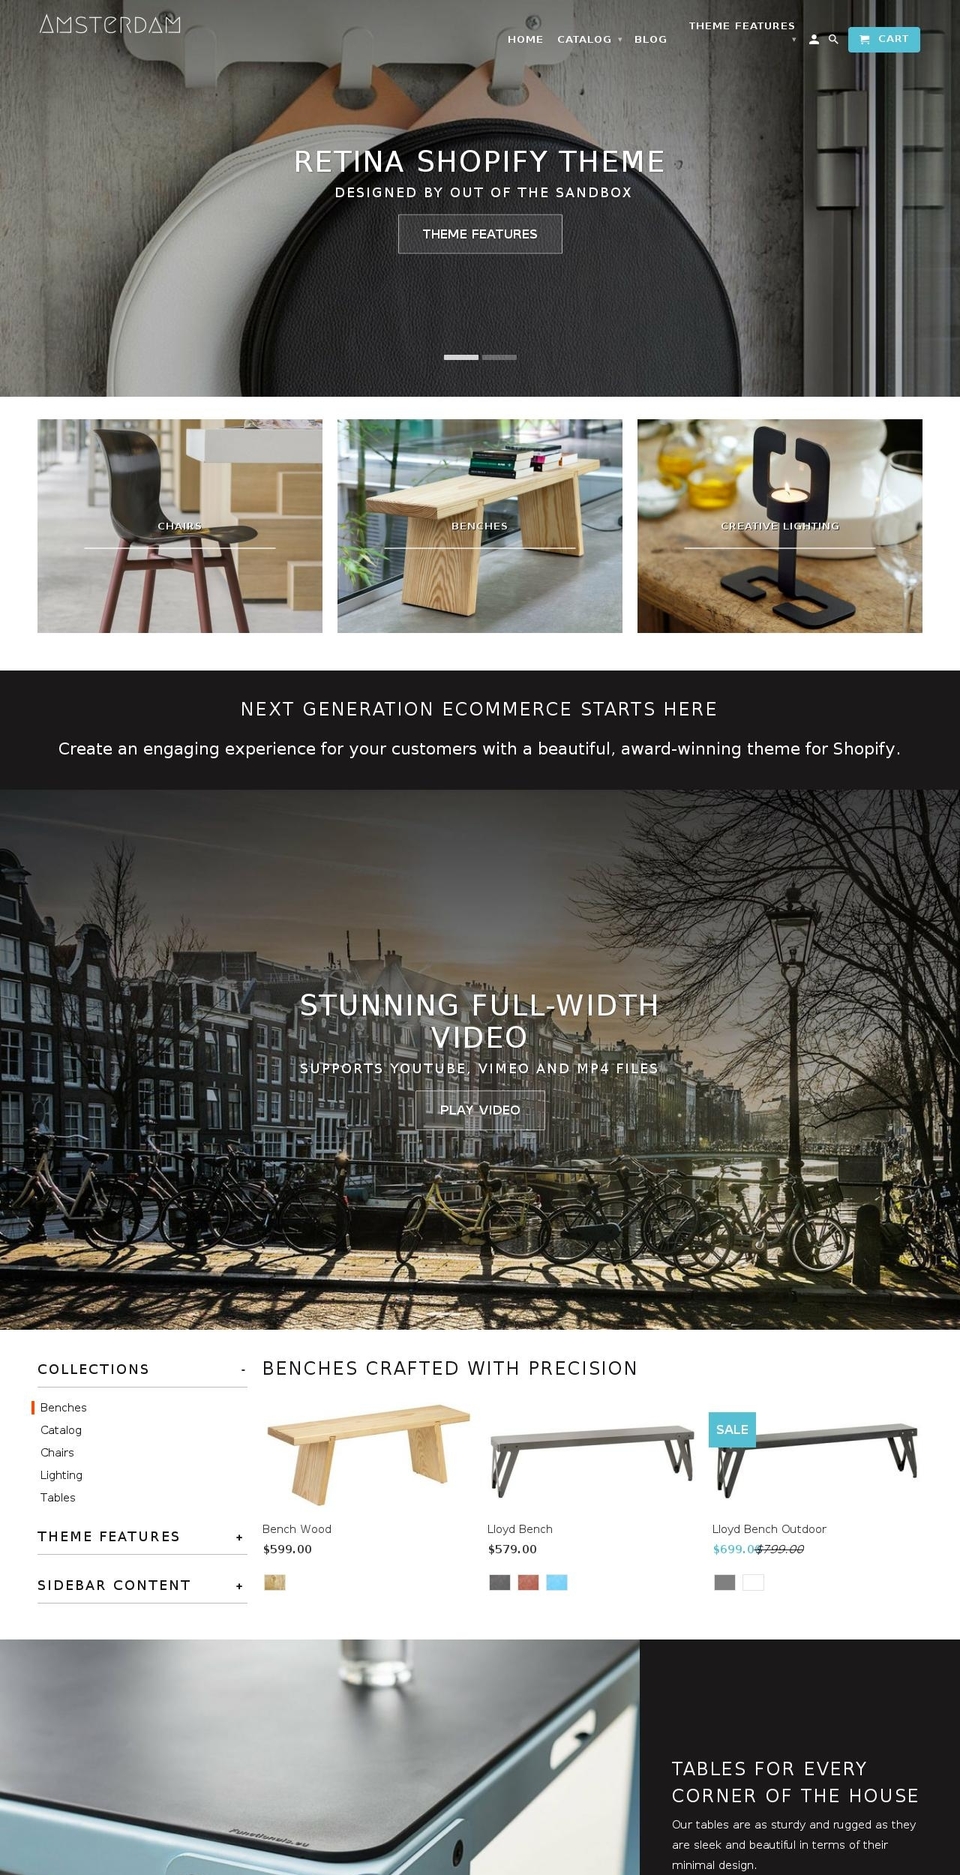 Retina Shopify theme site example retina-theme-amsterdam.myshopify.com